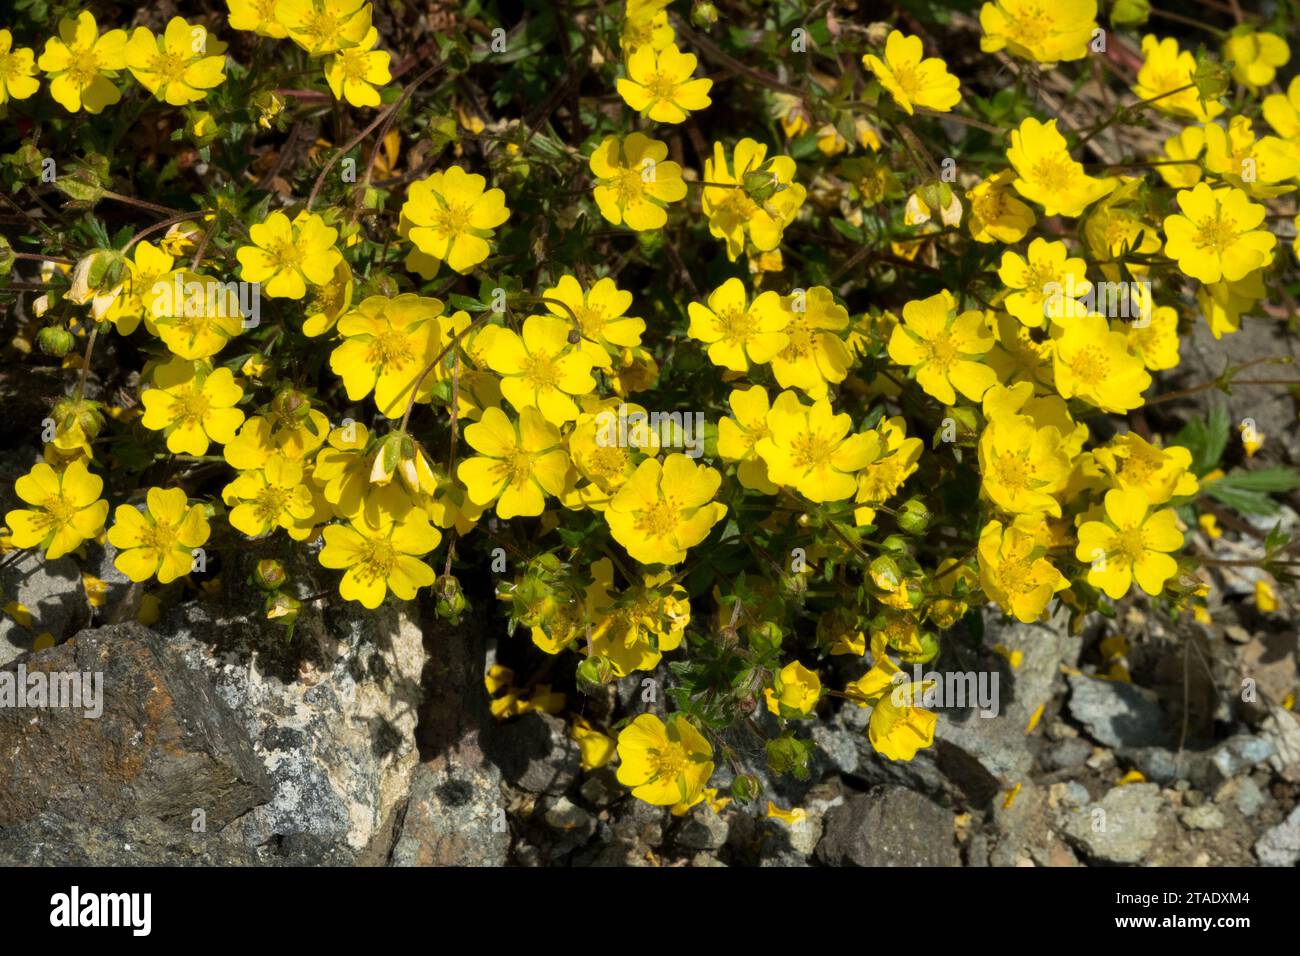 Potentilla crantzii, the alpine cinquefoil, is a flowering plant in the family Rosaceae. Stock Photo